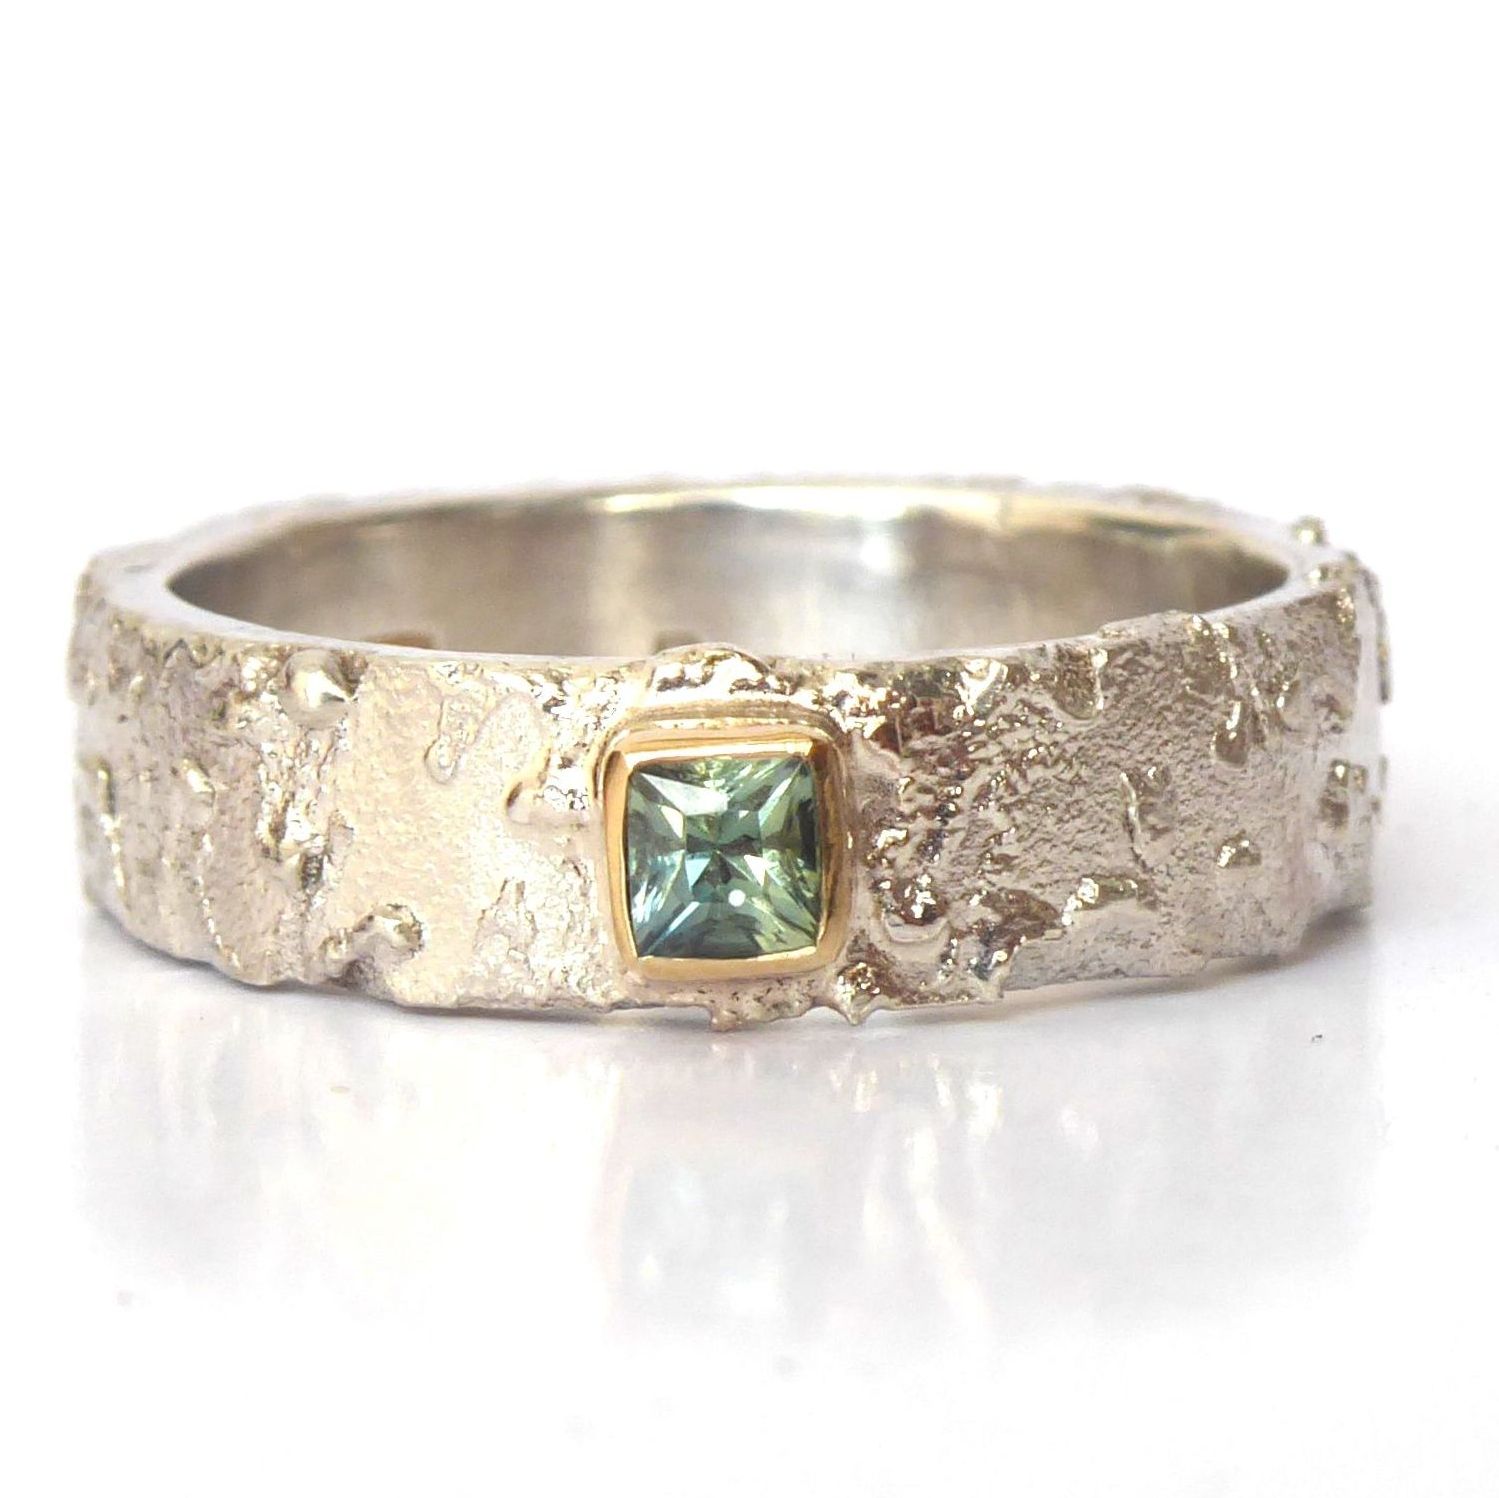 Unique princess cut sapphire rings, textured finish